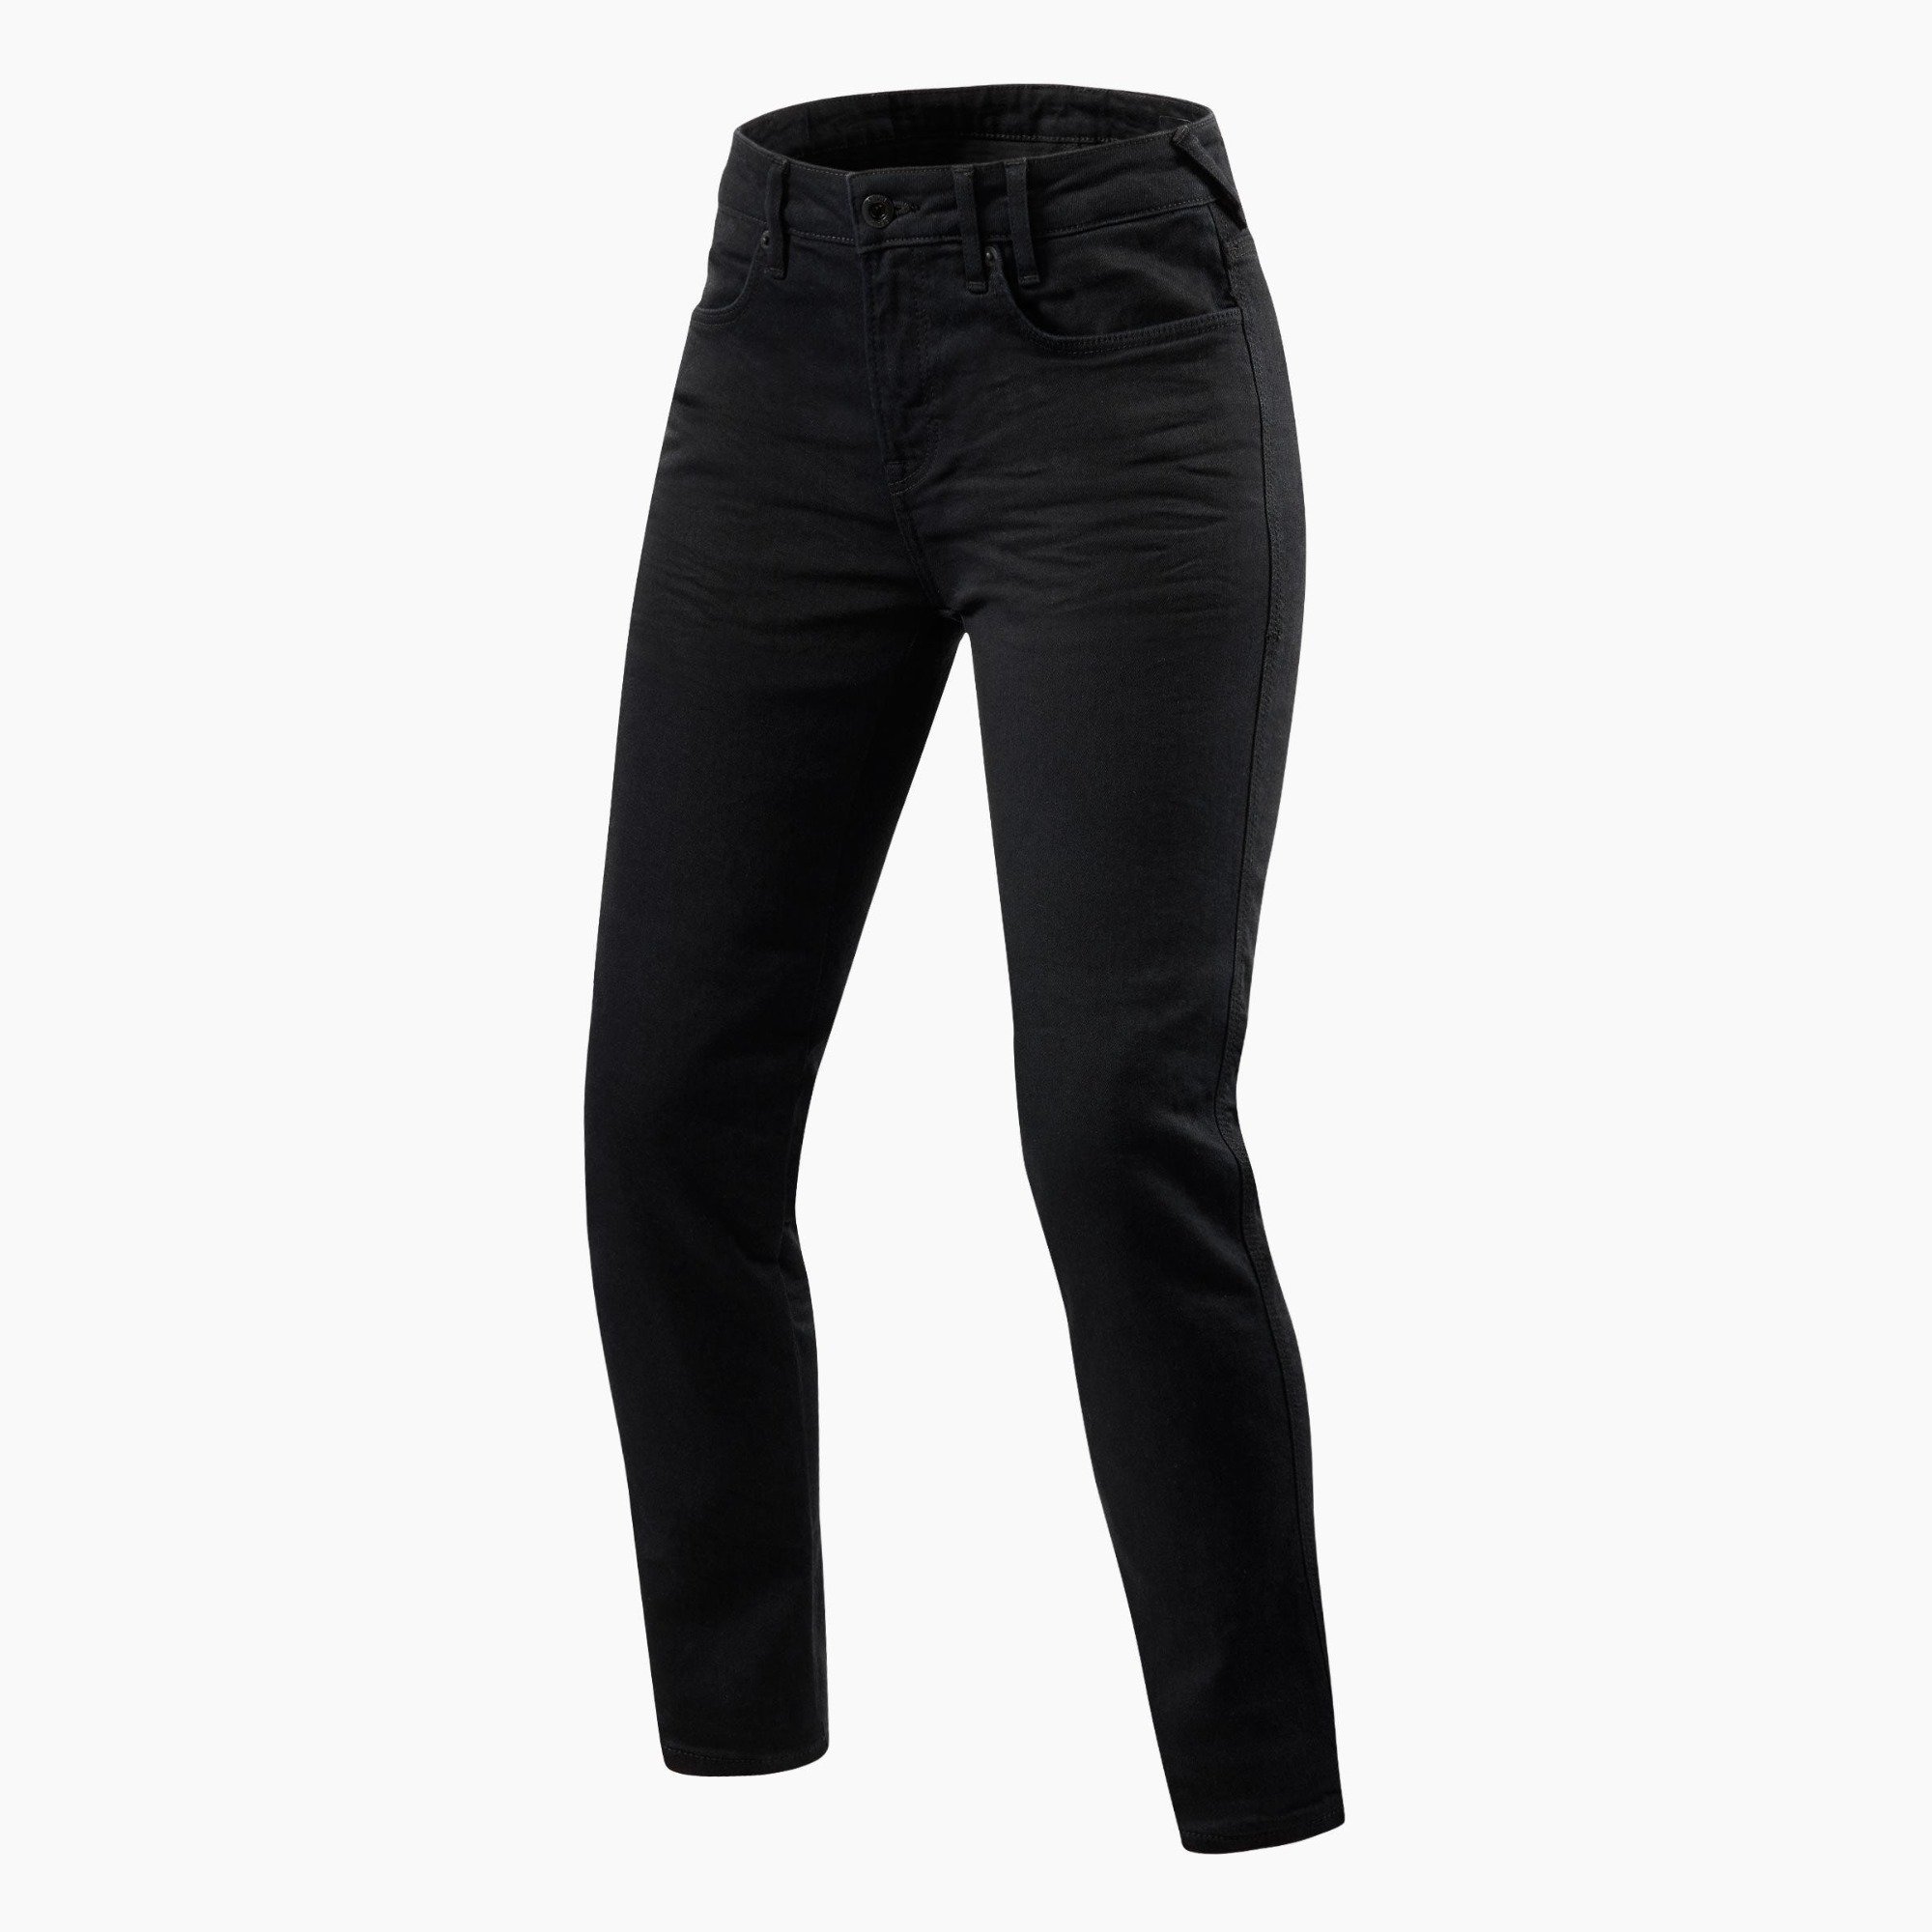 Image of REV'IT! Jeans Maple 2 Ladies SK Black Motorcycle Jeans Size L32/W26 EN